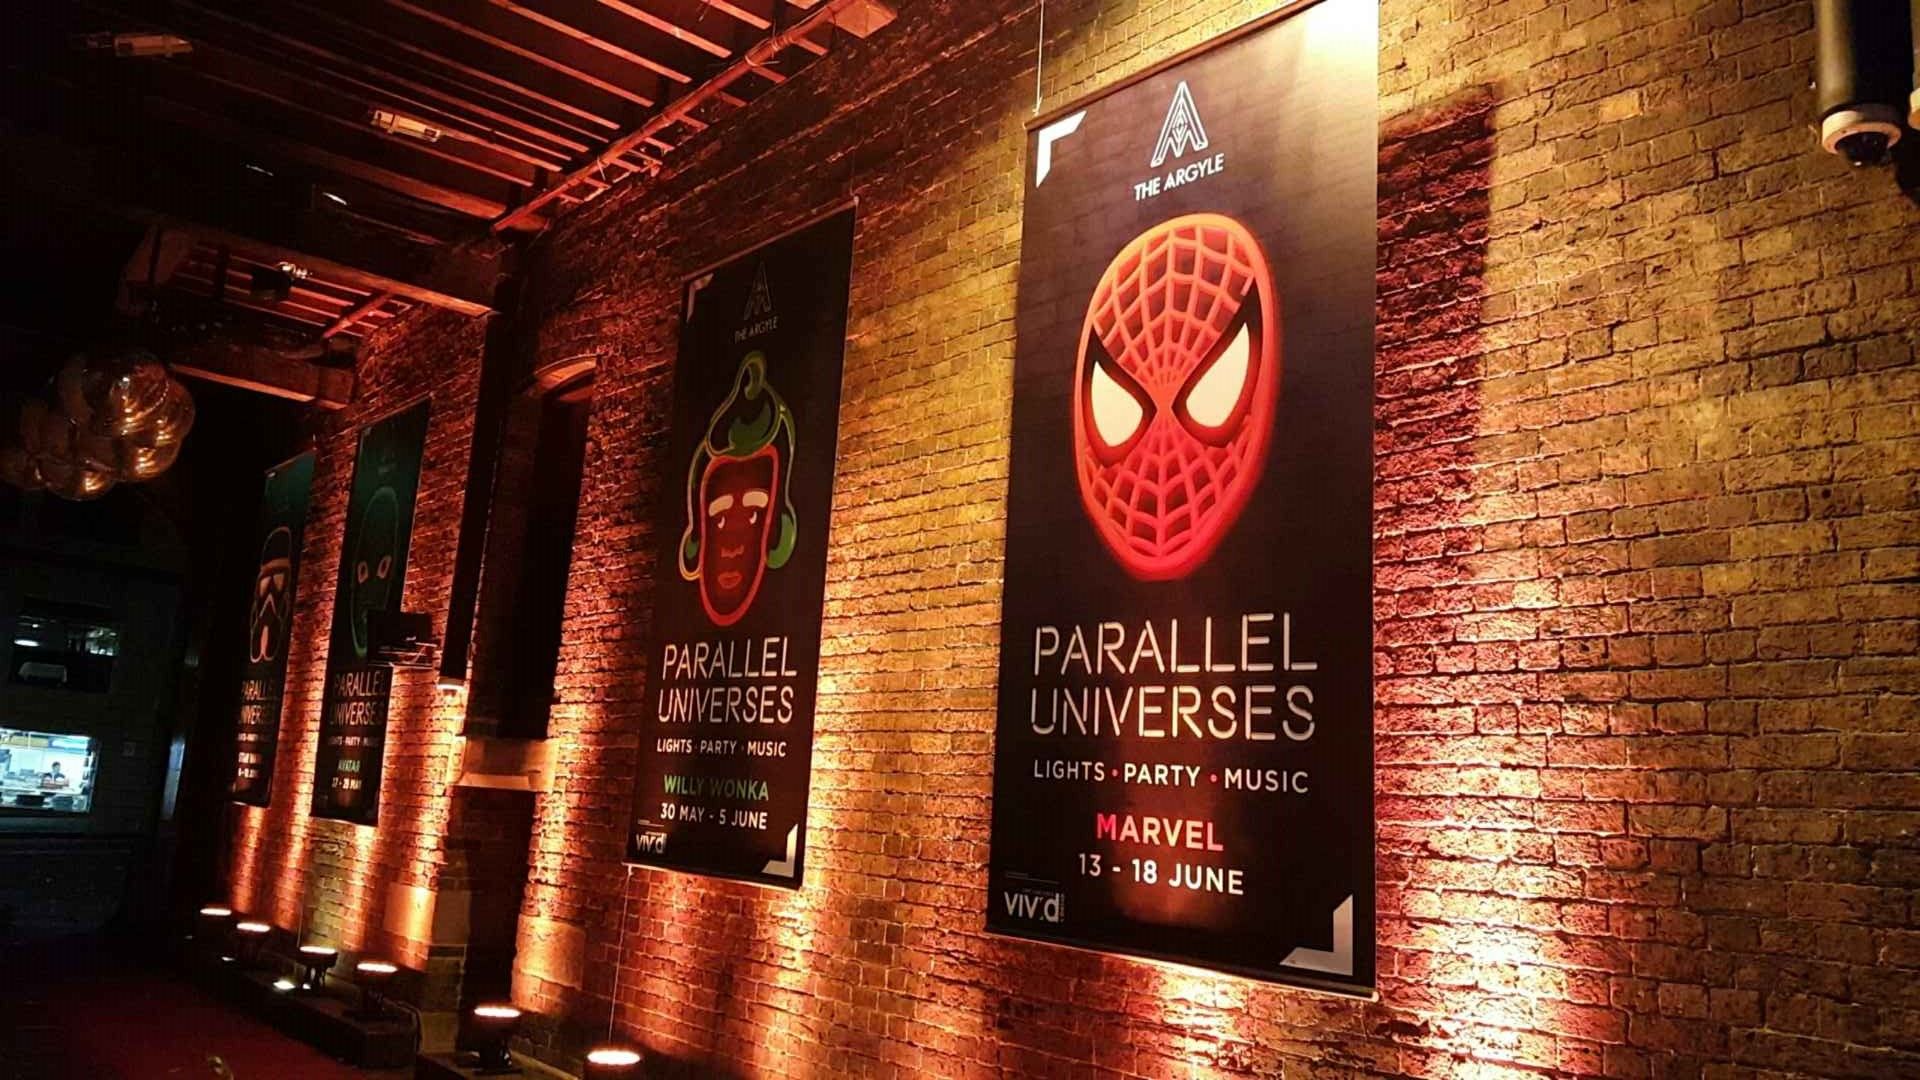 The Argyle "Parallel Universes" Banners